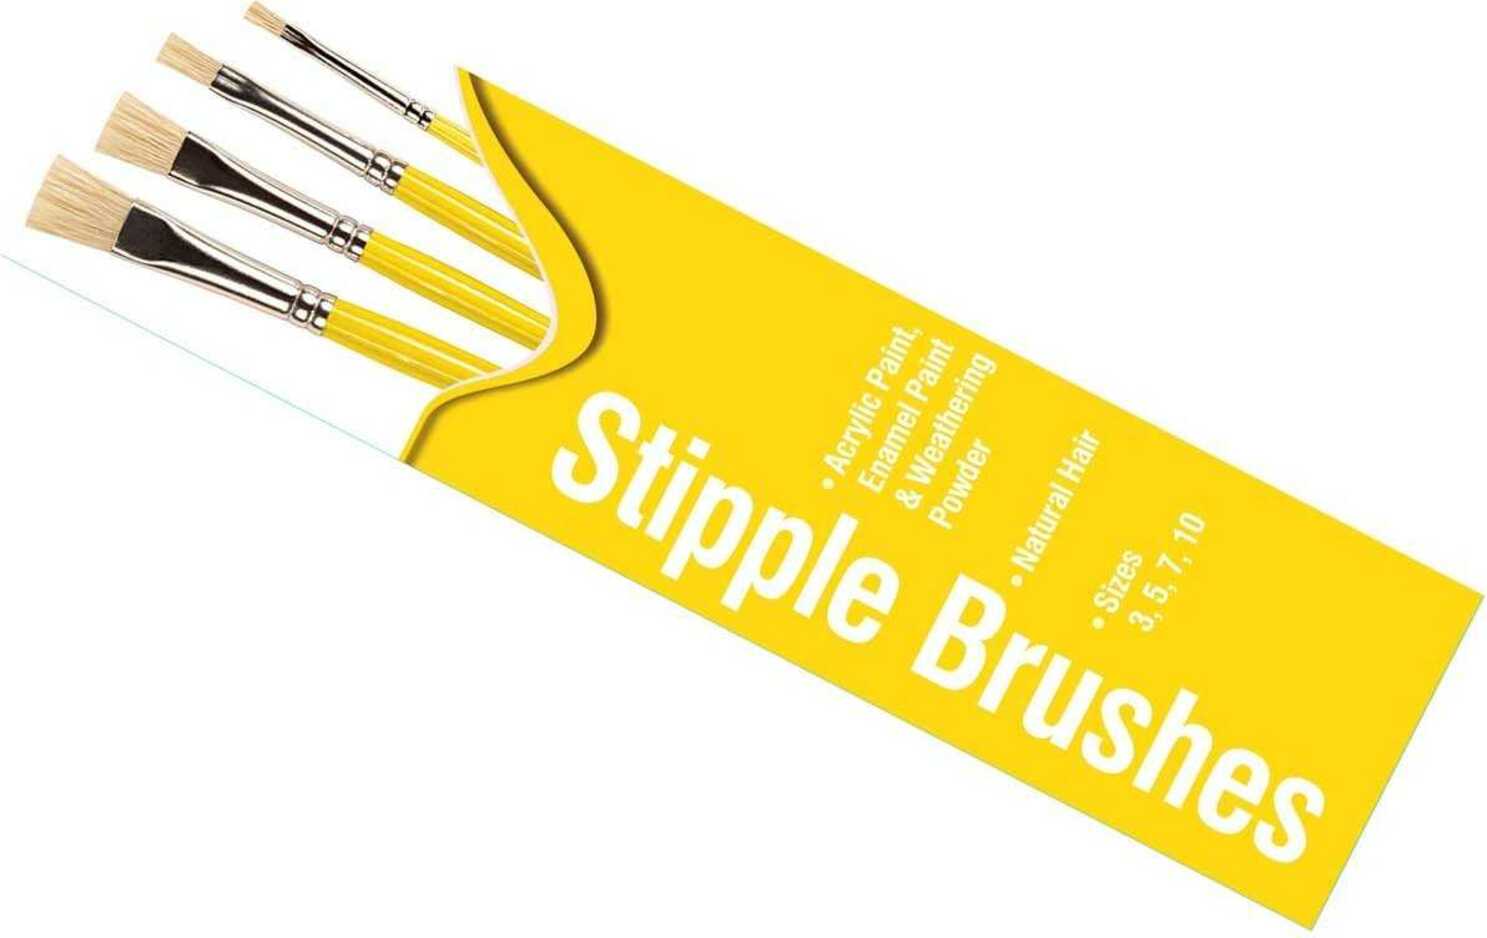 HUMBROL Stipple Brush pack AG430 - sada plochých štětců (velikost 3/5/7/10)